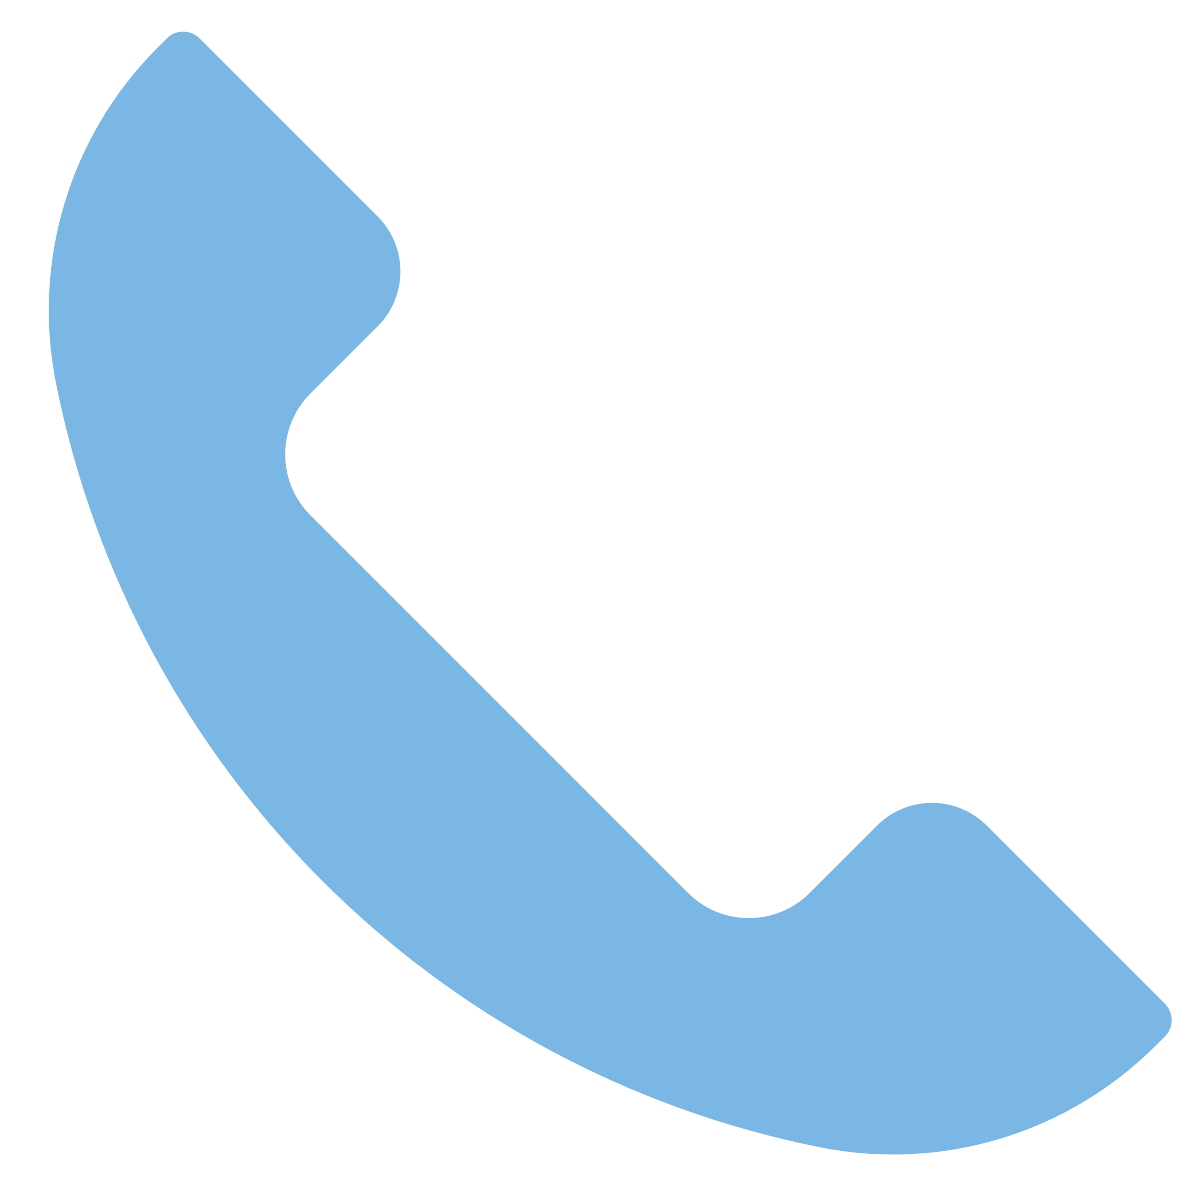 Phone symbol reminder to schedule job interview.